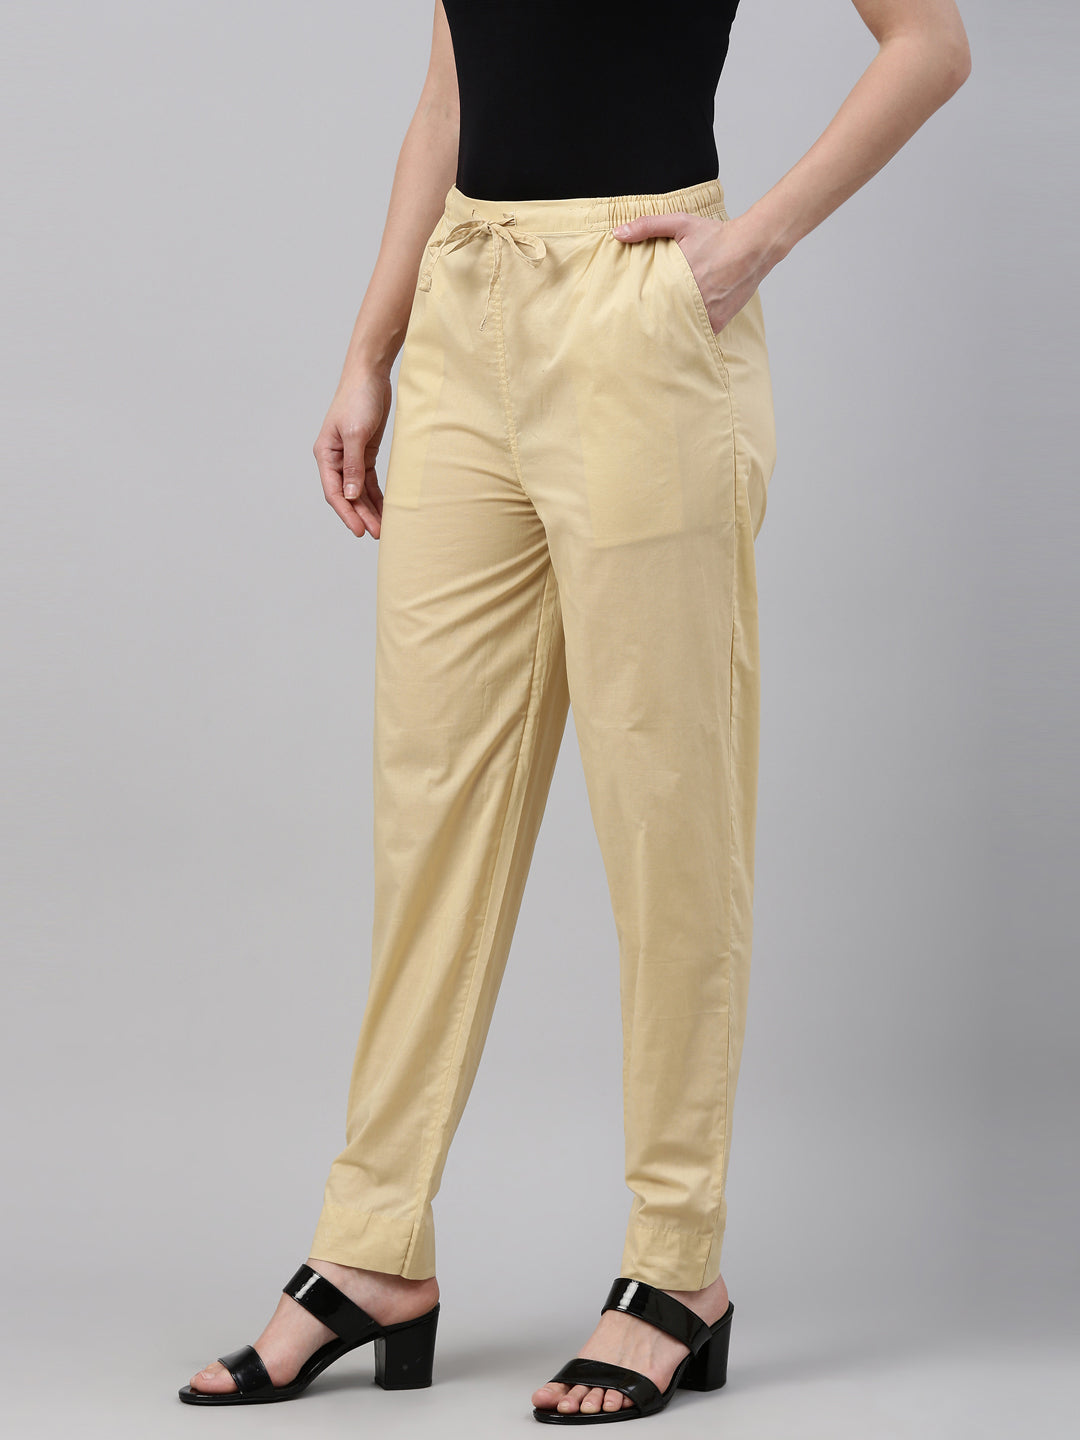 Buy Beige Solid Slim Pants Online - W for Woman